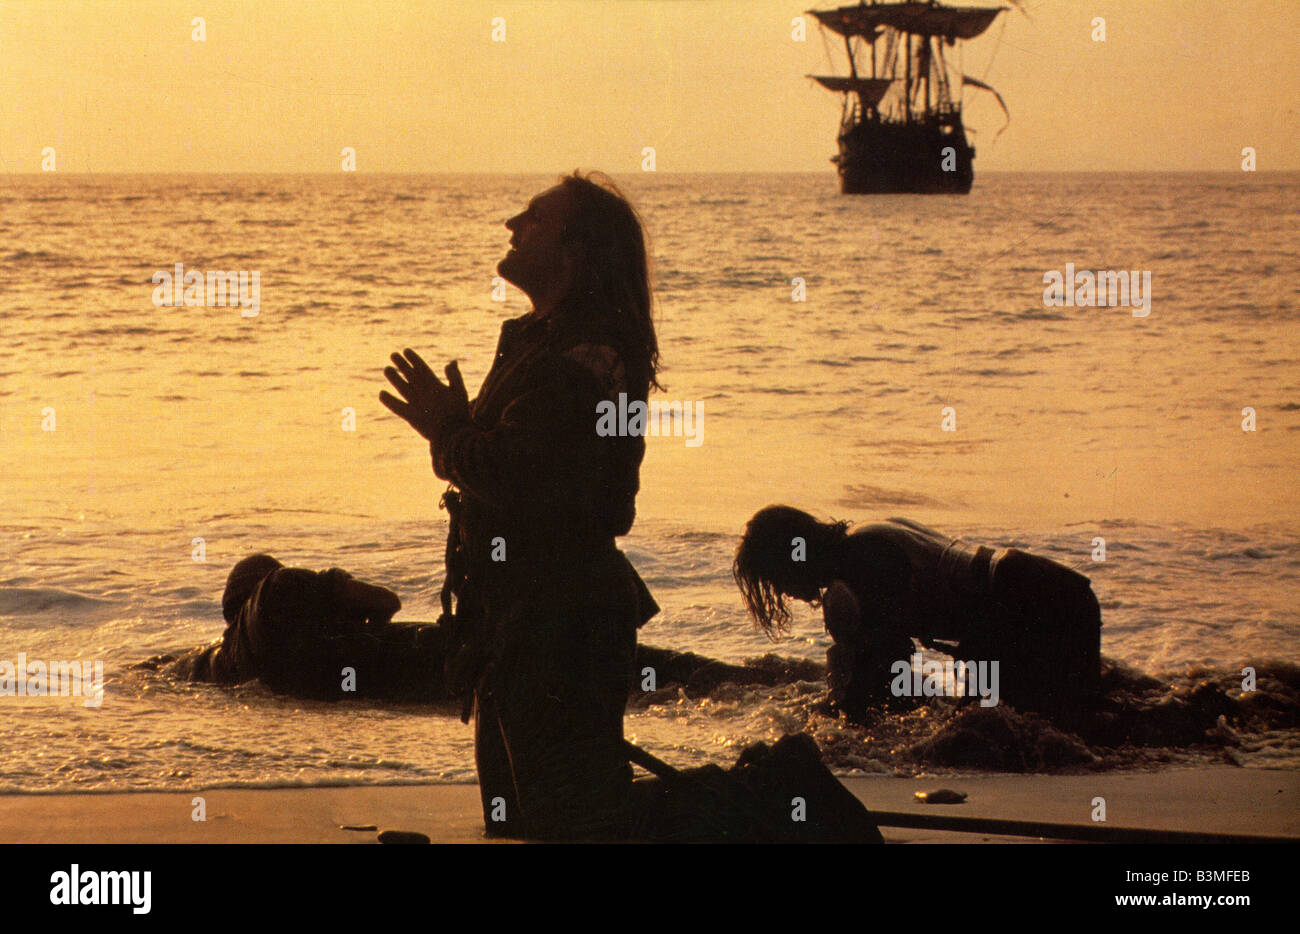 1492: CONQUEST OF PARADISE - 1992 Gaumont Film mit Gérard Depardieu als Columbus Stockfoto